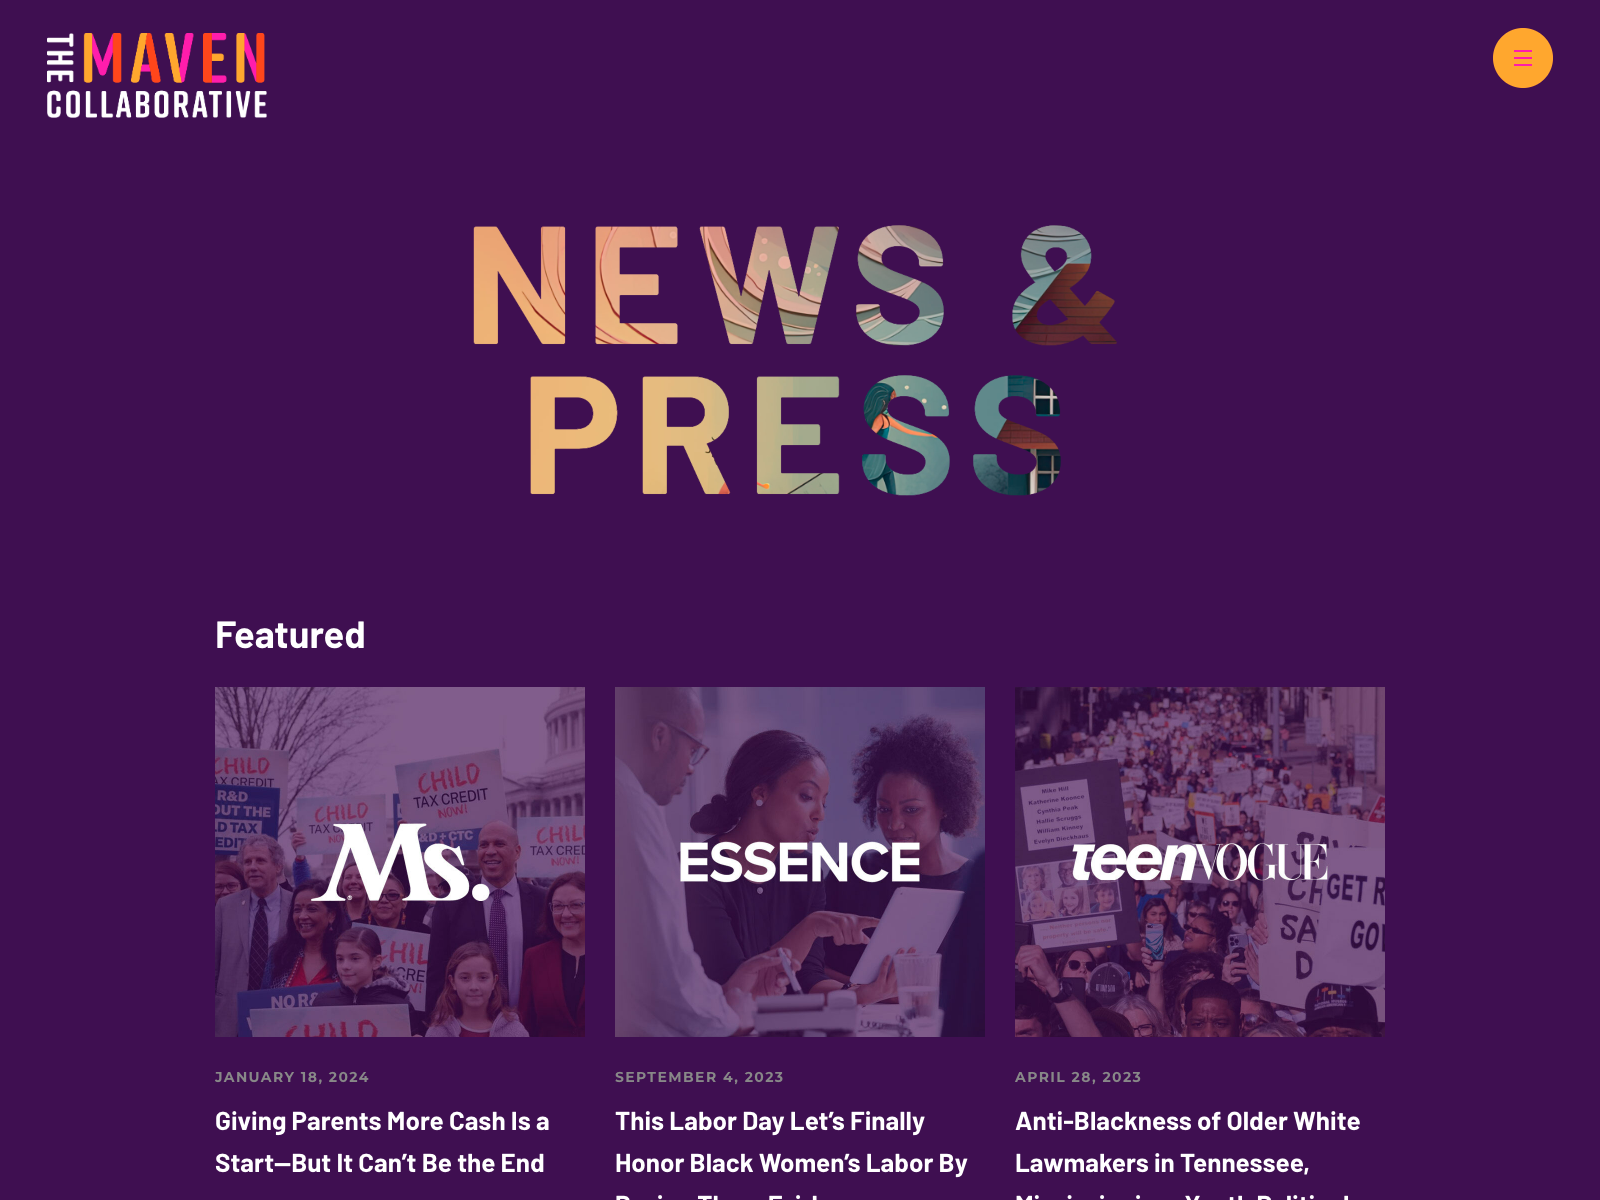 News & Press